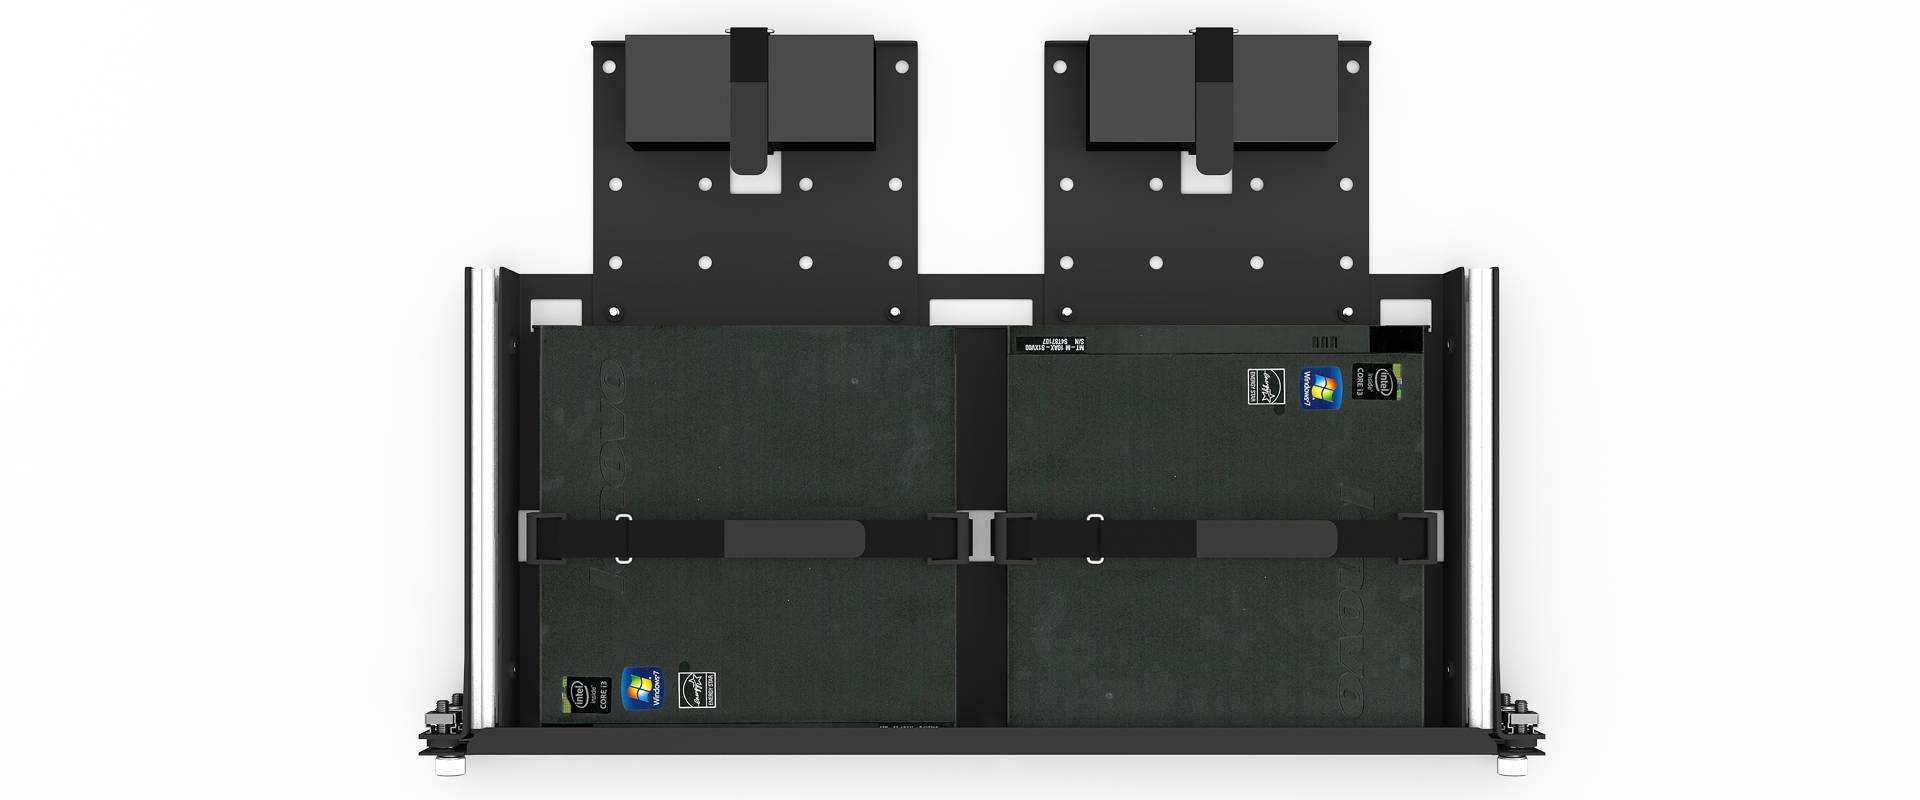 ThinkStation Tiny rack mount kit